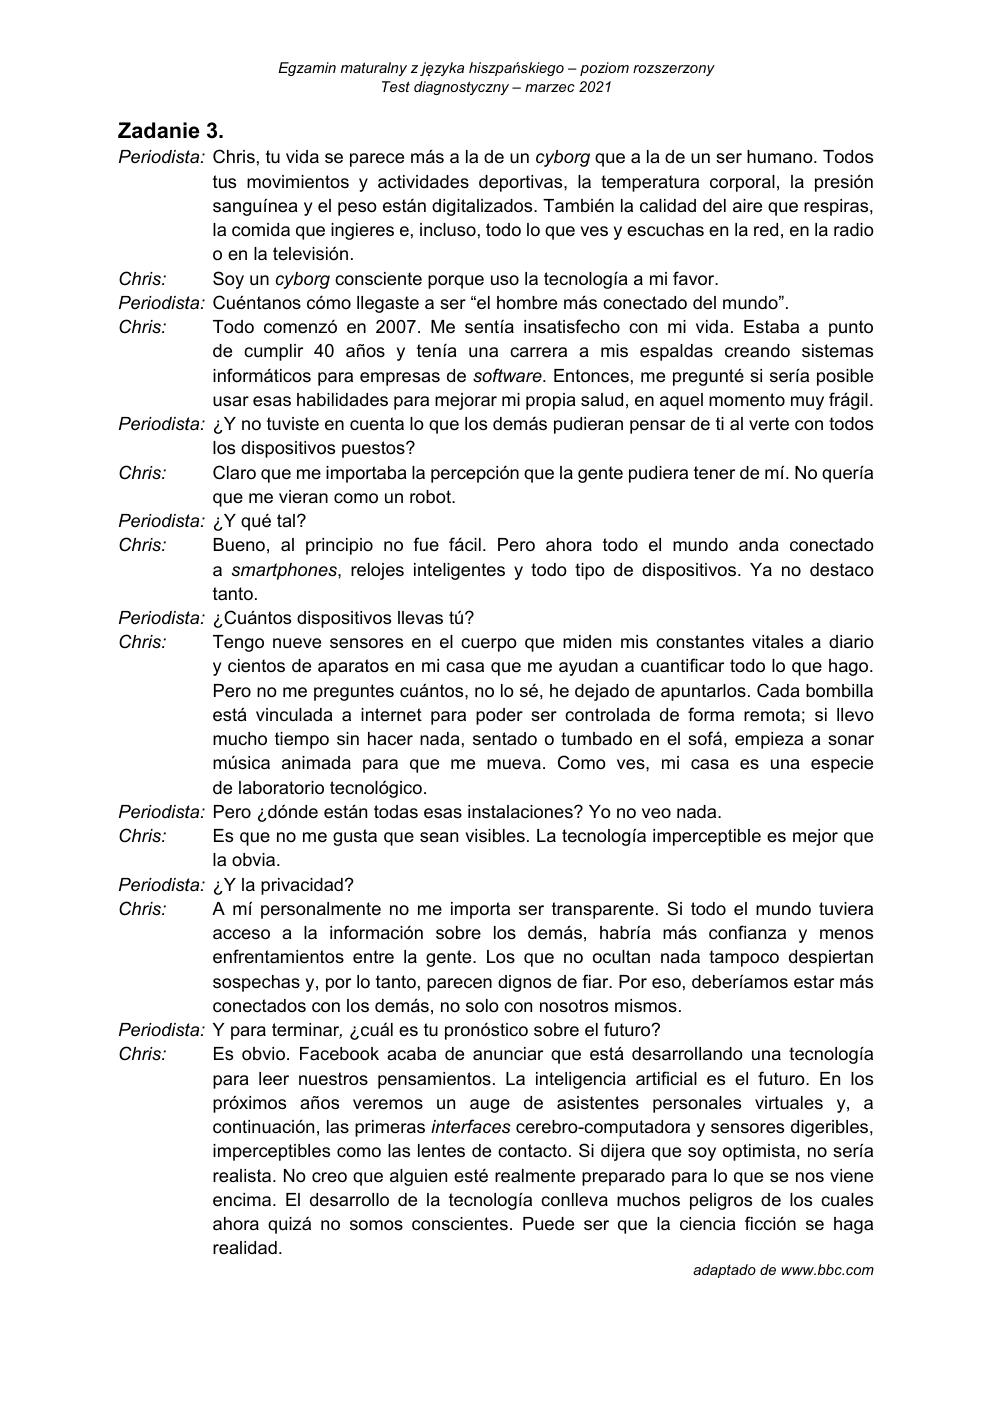 transkrypcja - hiszpański rozszerzony - matura 2021 próbna-3